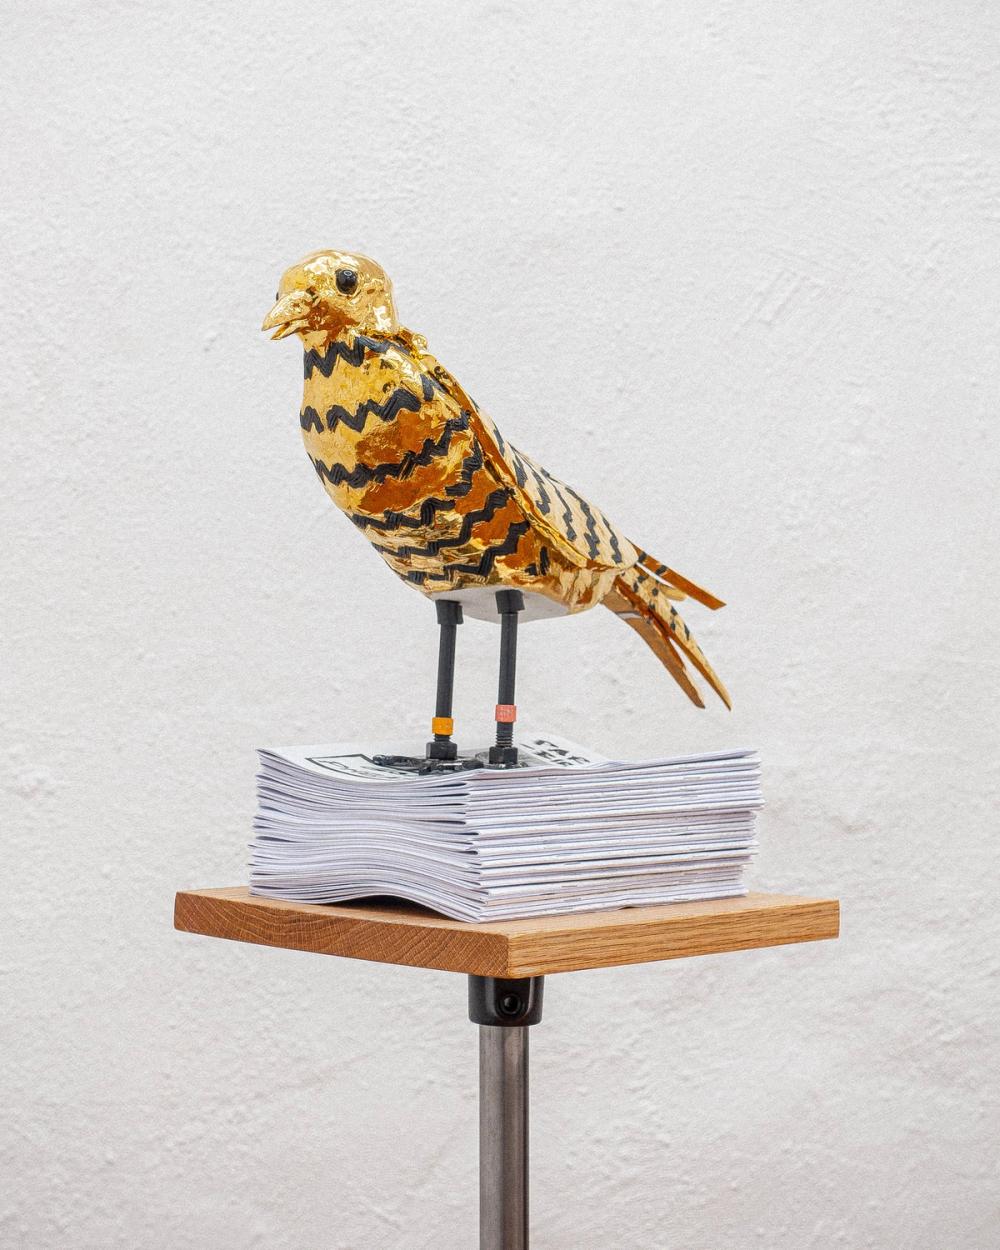 Artwork: Golden Pheasant